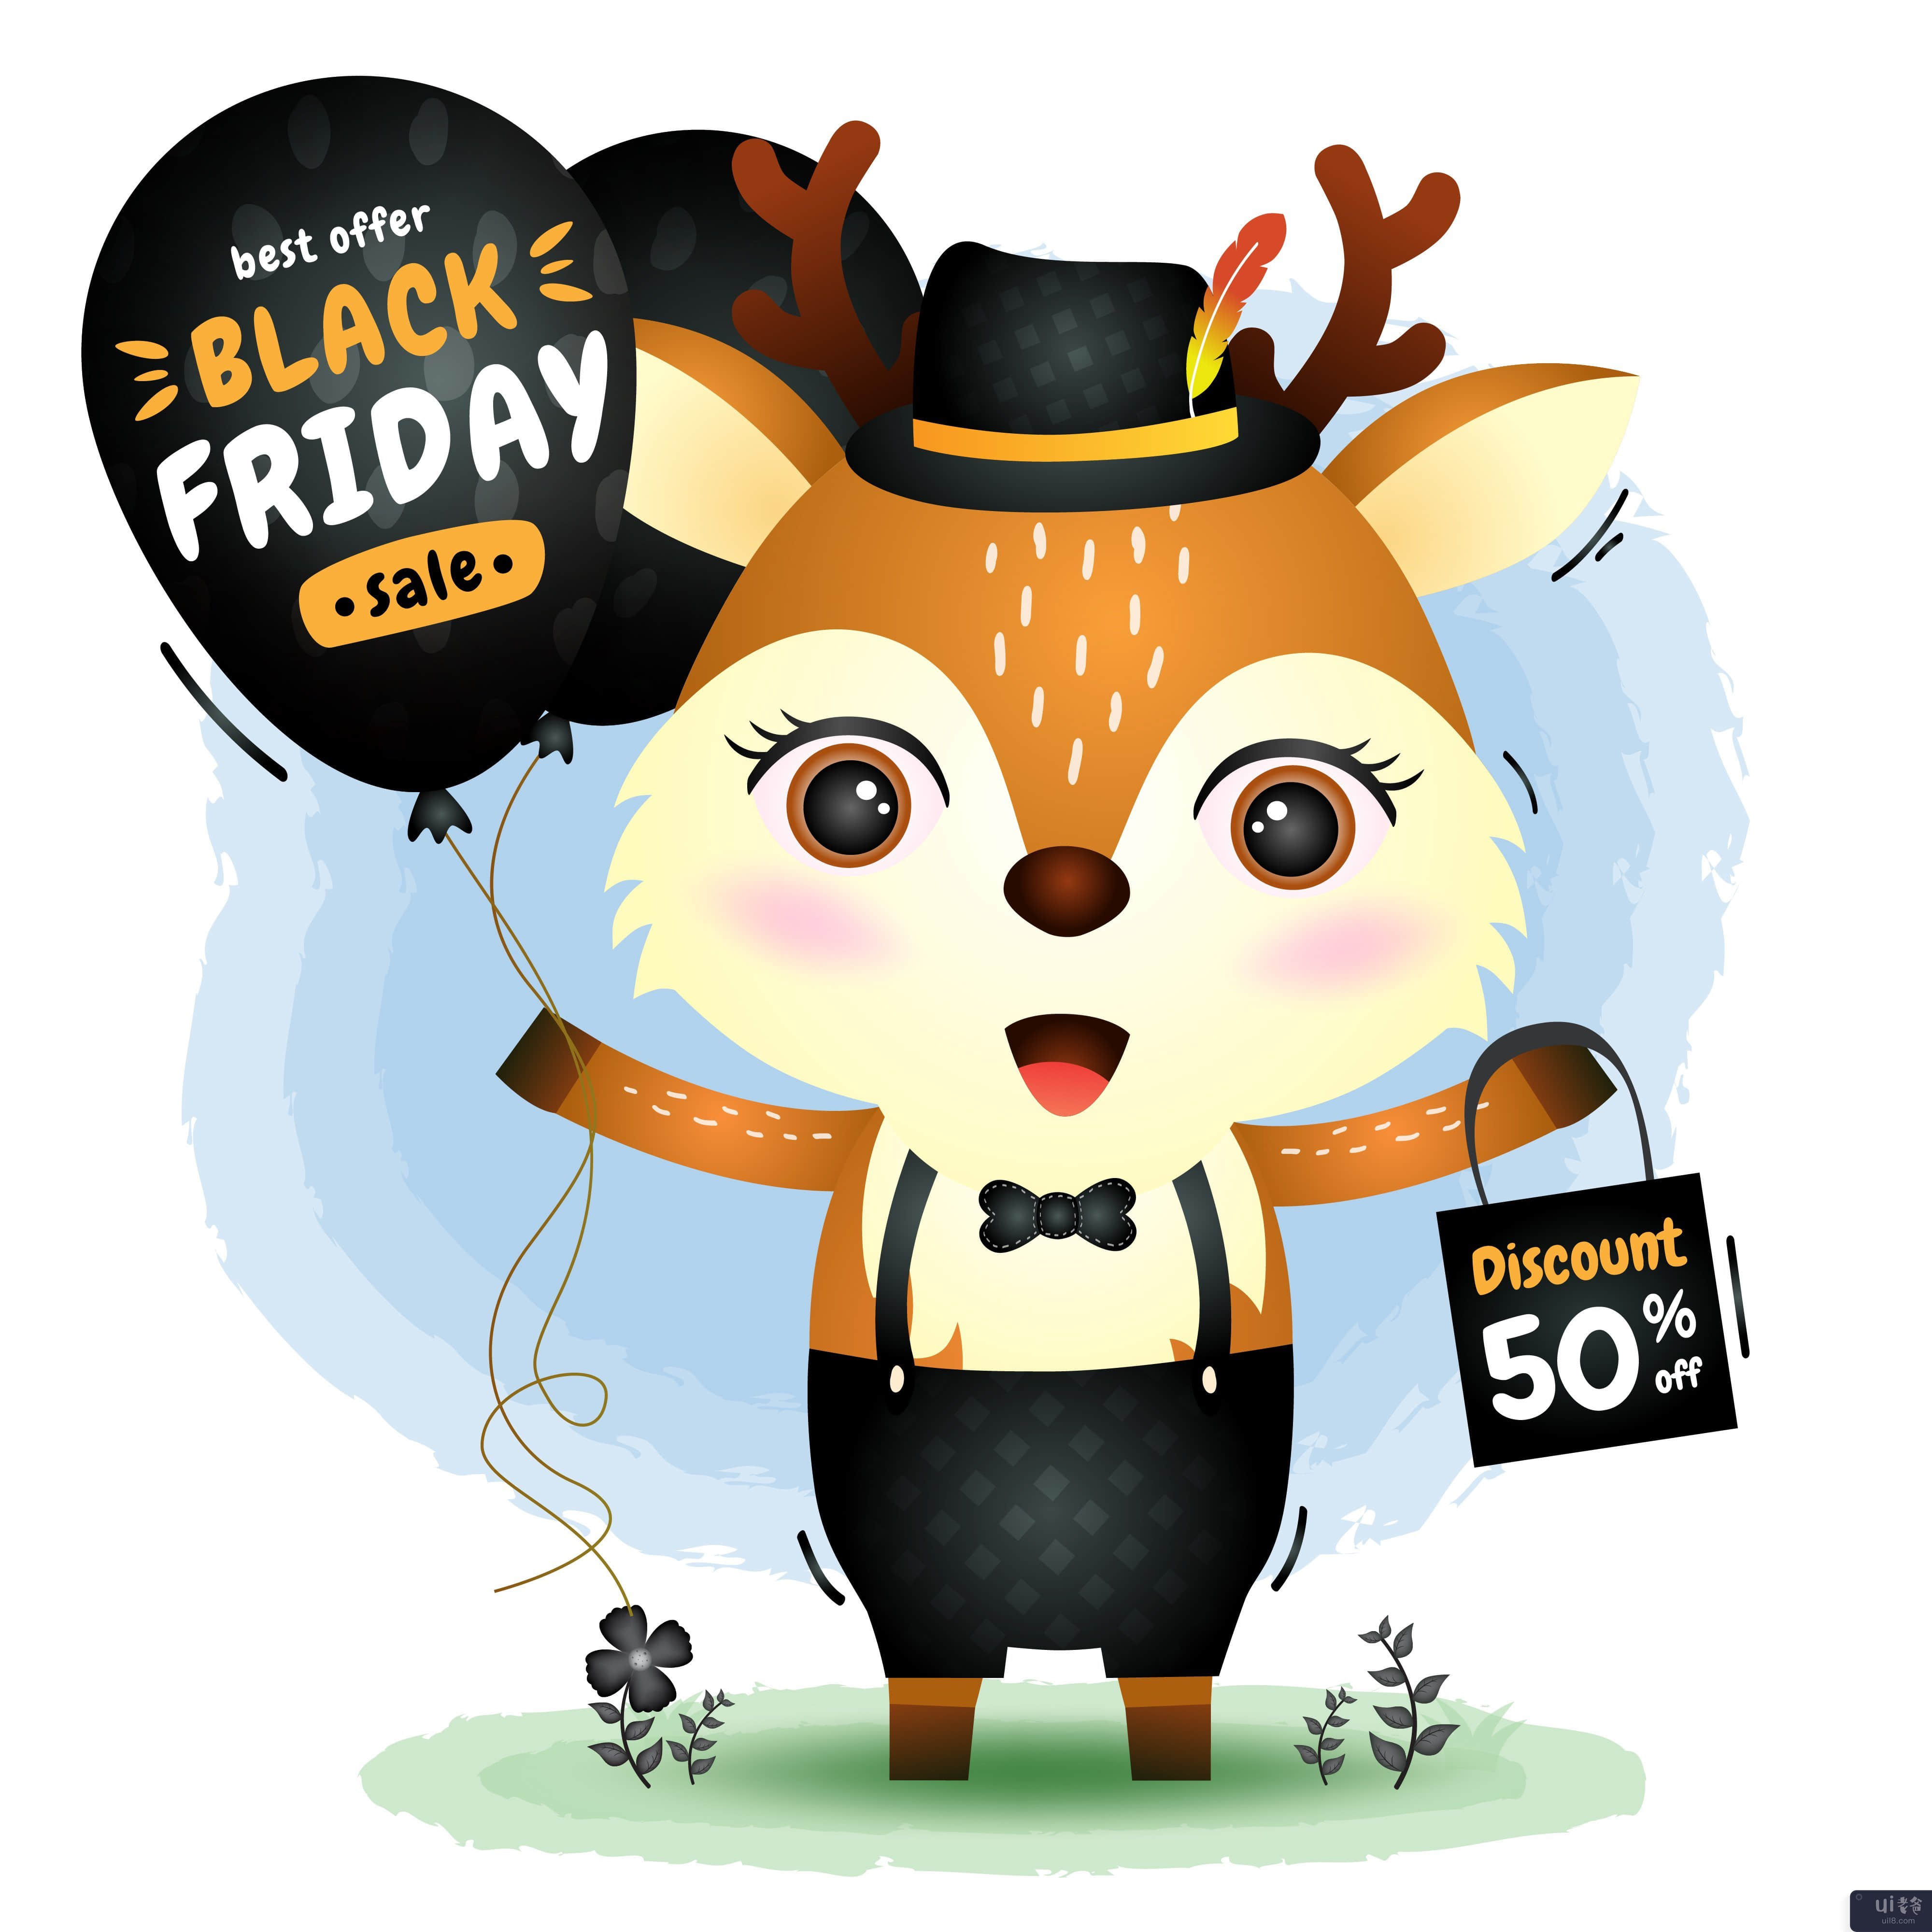 黑色星期五促销活动，提供可爱的鹿气球促销(Black friday sale with a cute deer hold balloon promotion)插图2